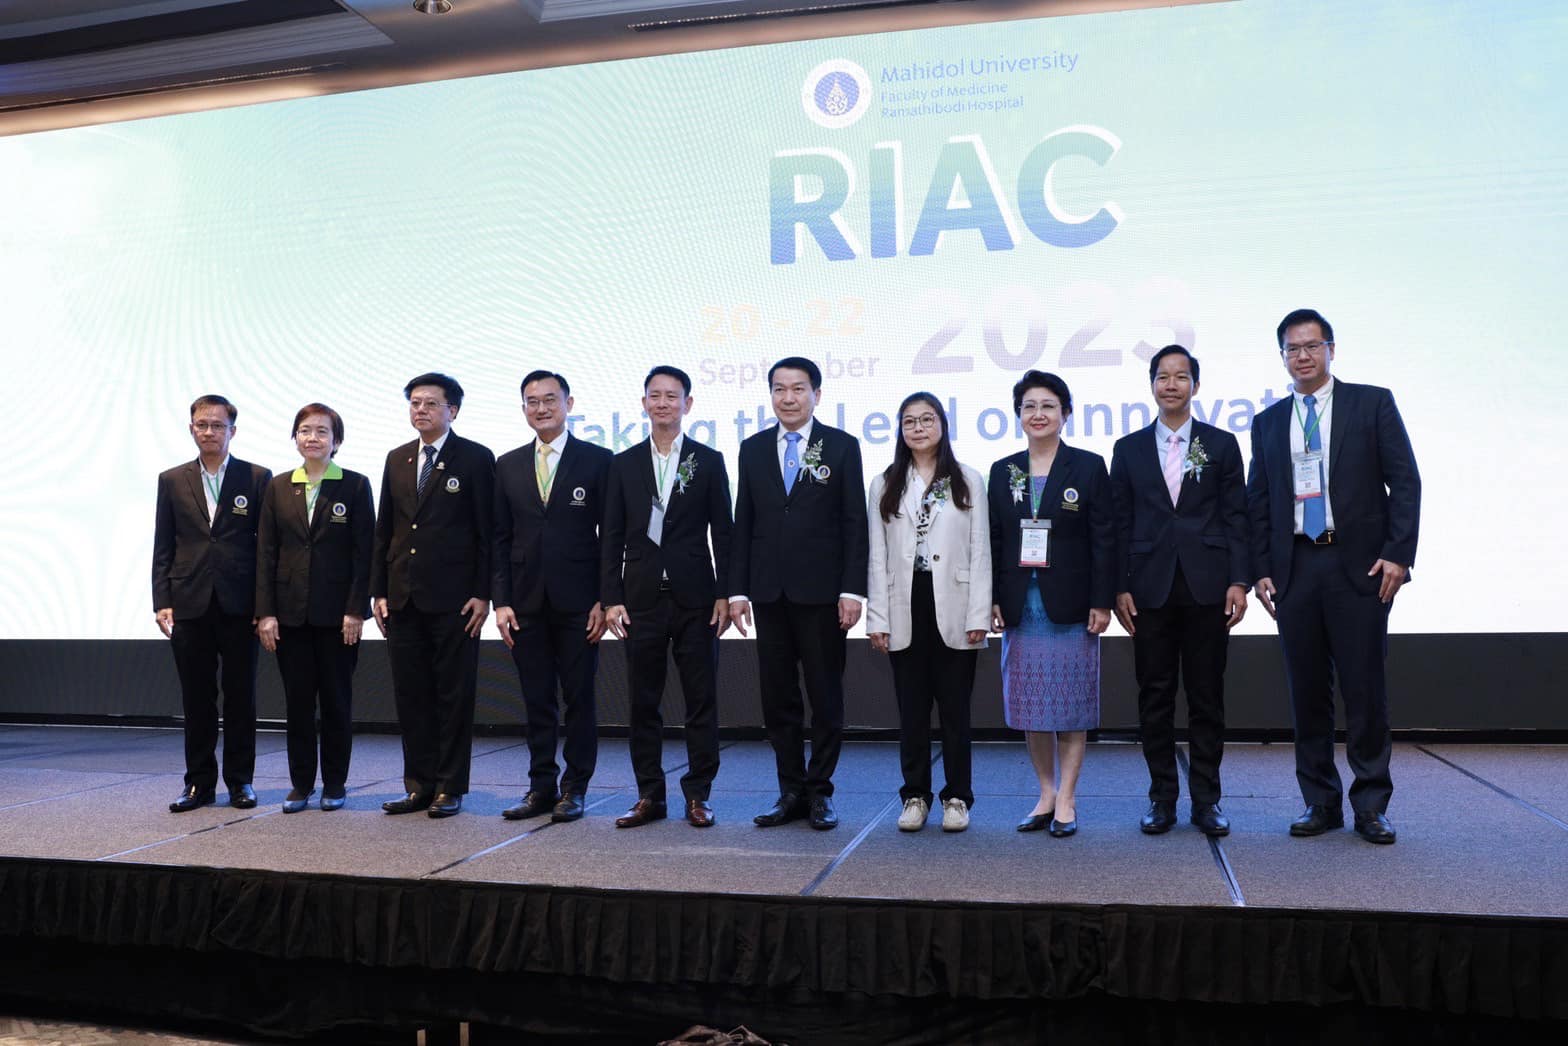 The Academic Conference “Ramathibodi International Academic Conference (RIAC 2023): Taking the Lead in Innovation and Future of Medicine”